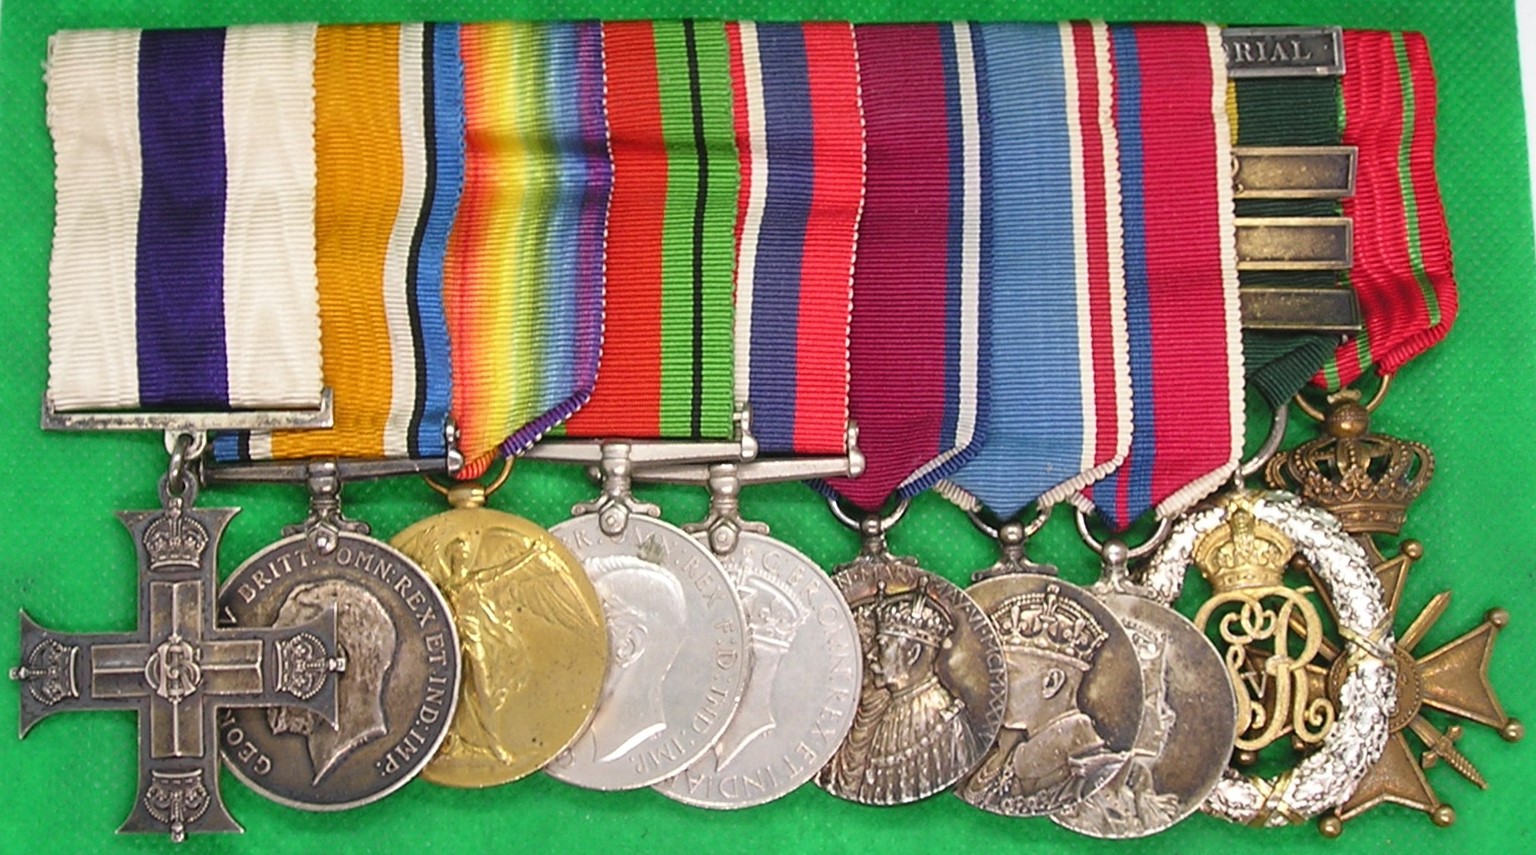 Wakefield medal fair